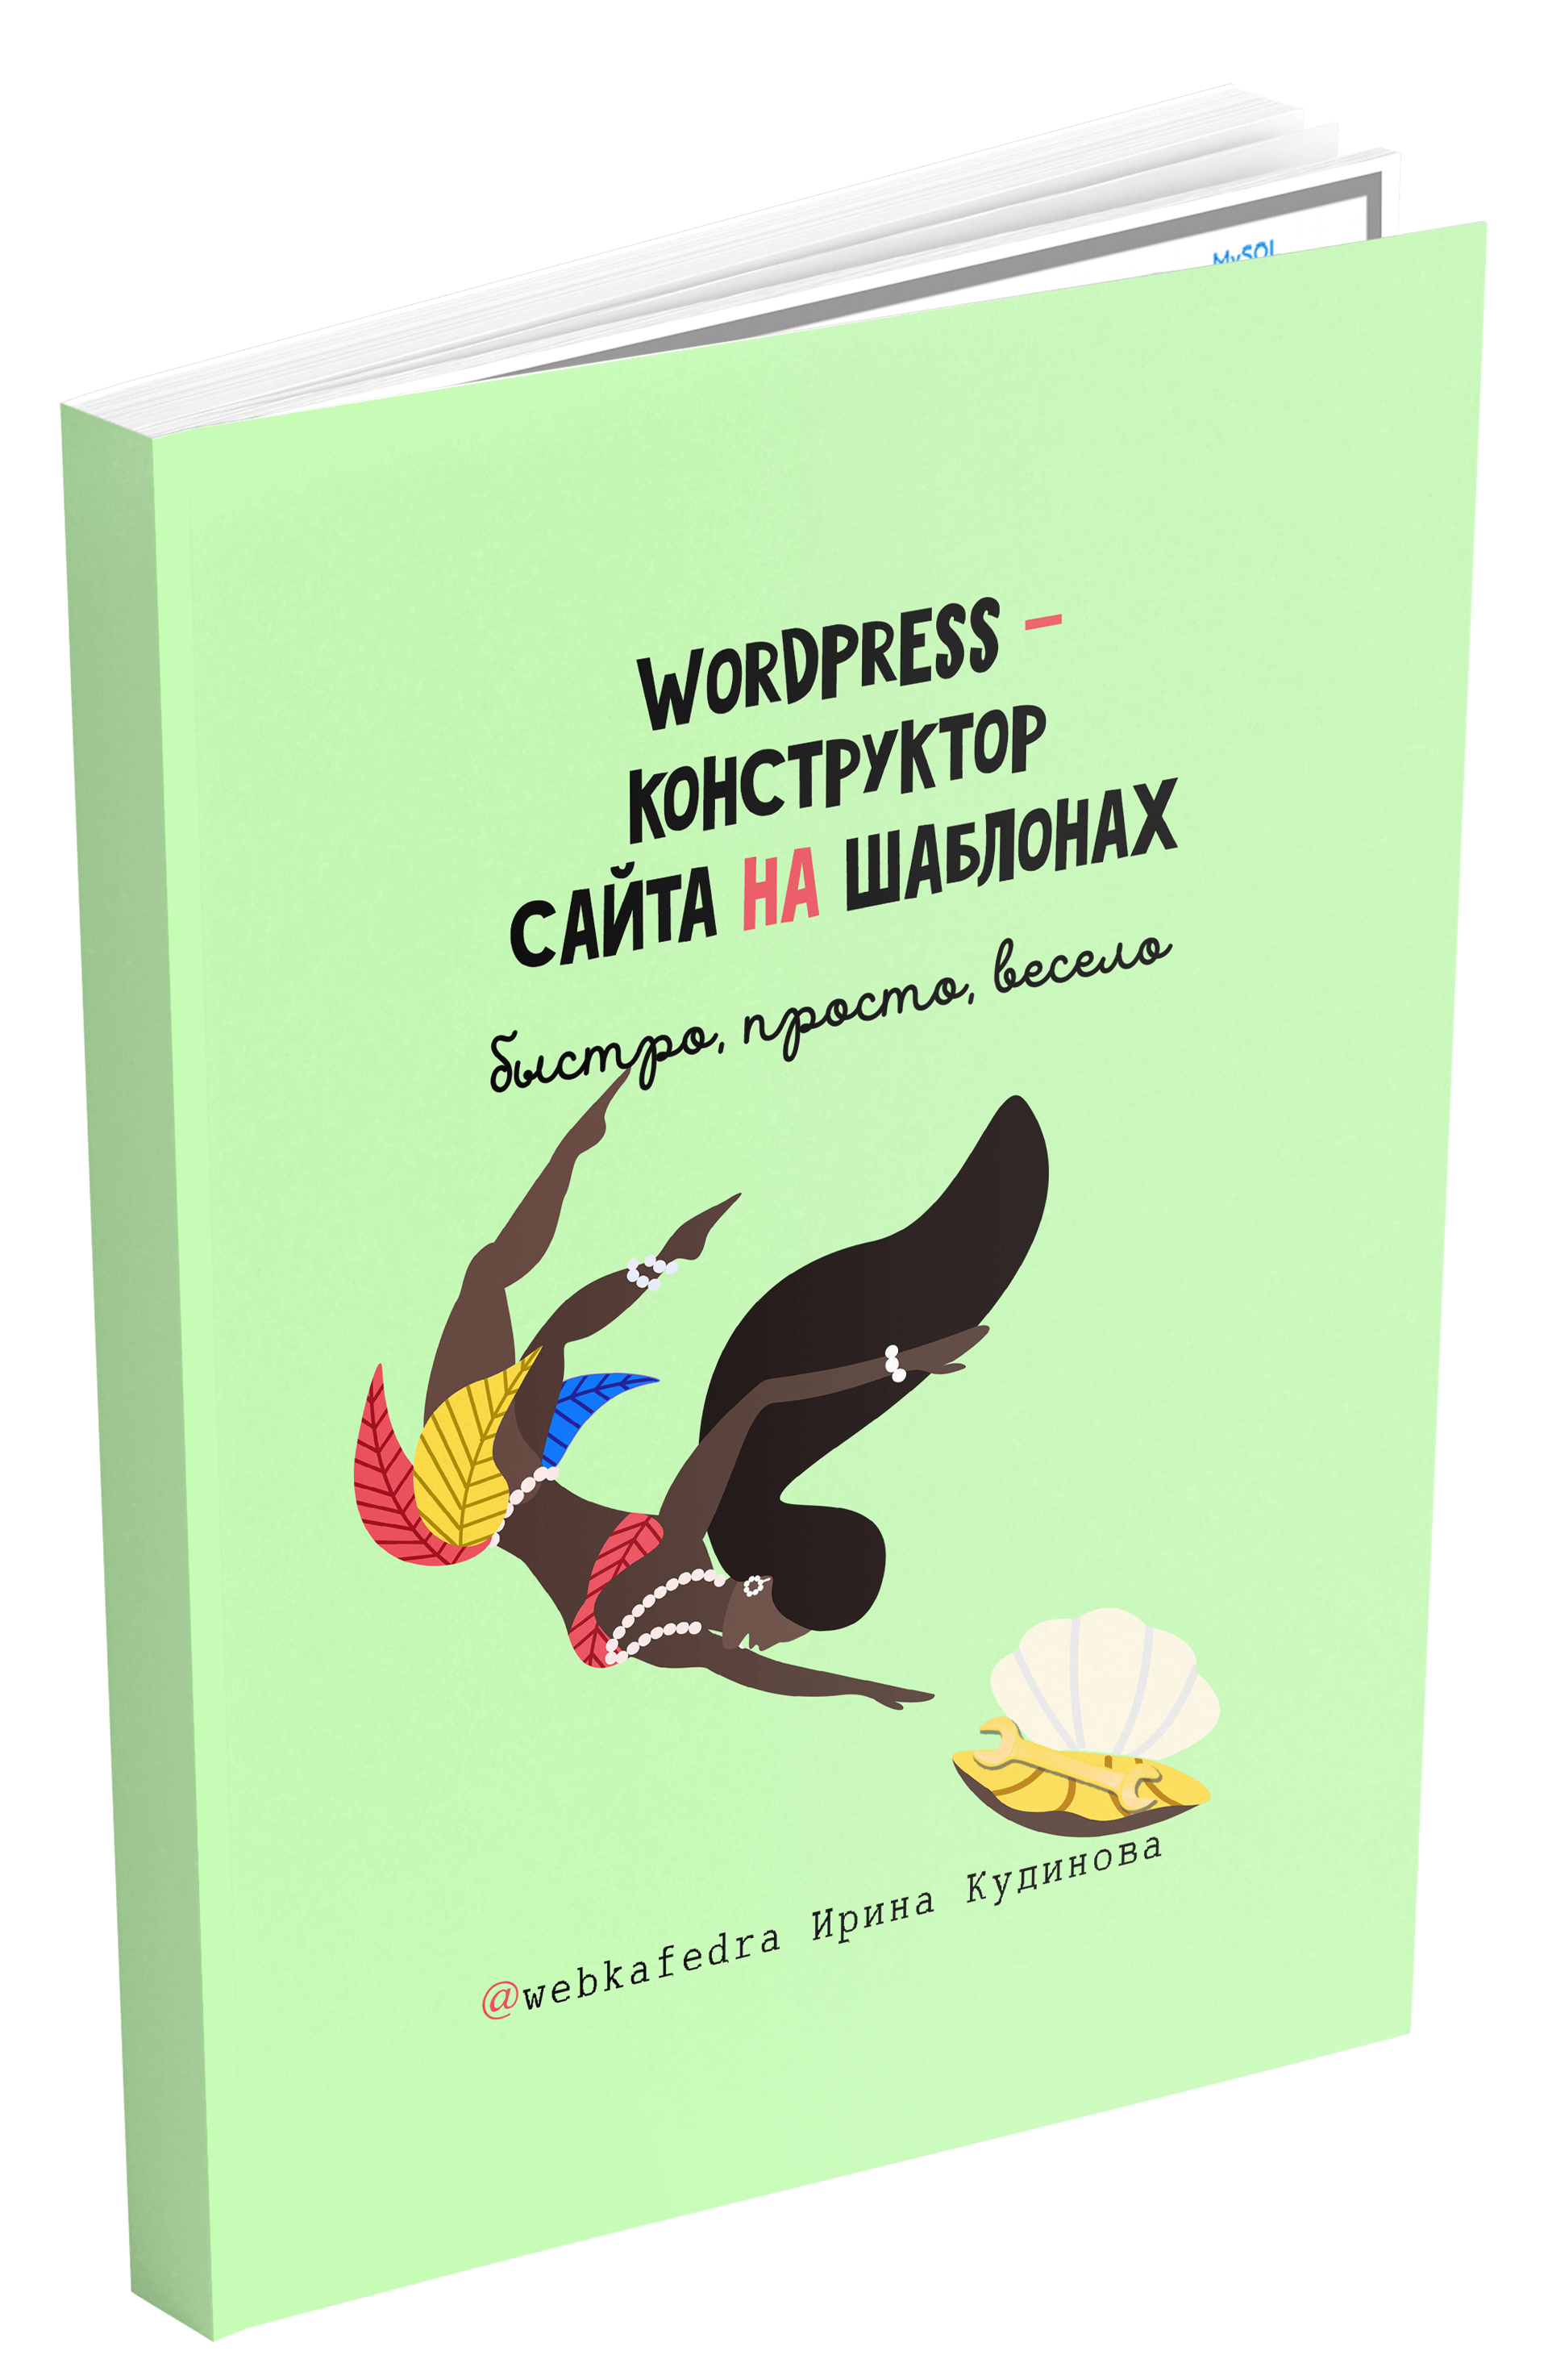 WordPress — конструктор сайта на шаблонах